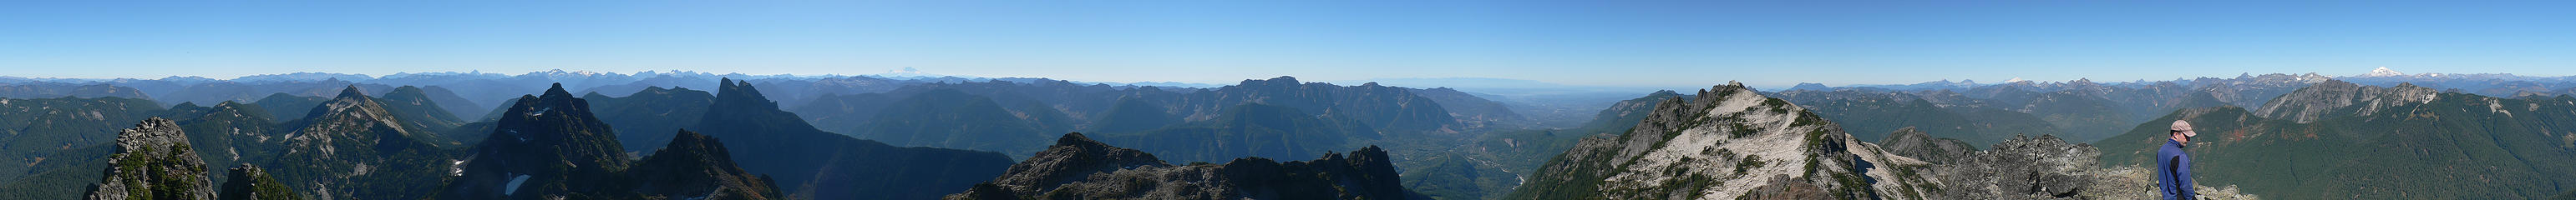 360 degree view from the summit of Gunn Peak, taken 9.24.06.